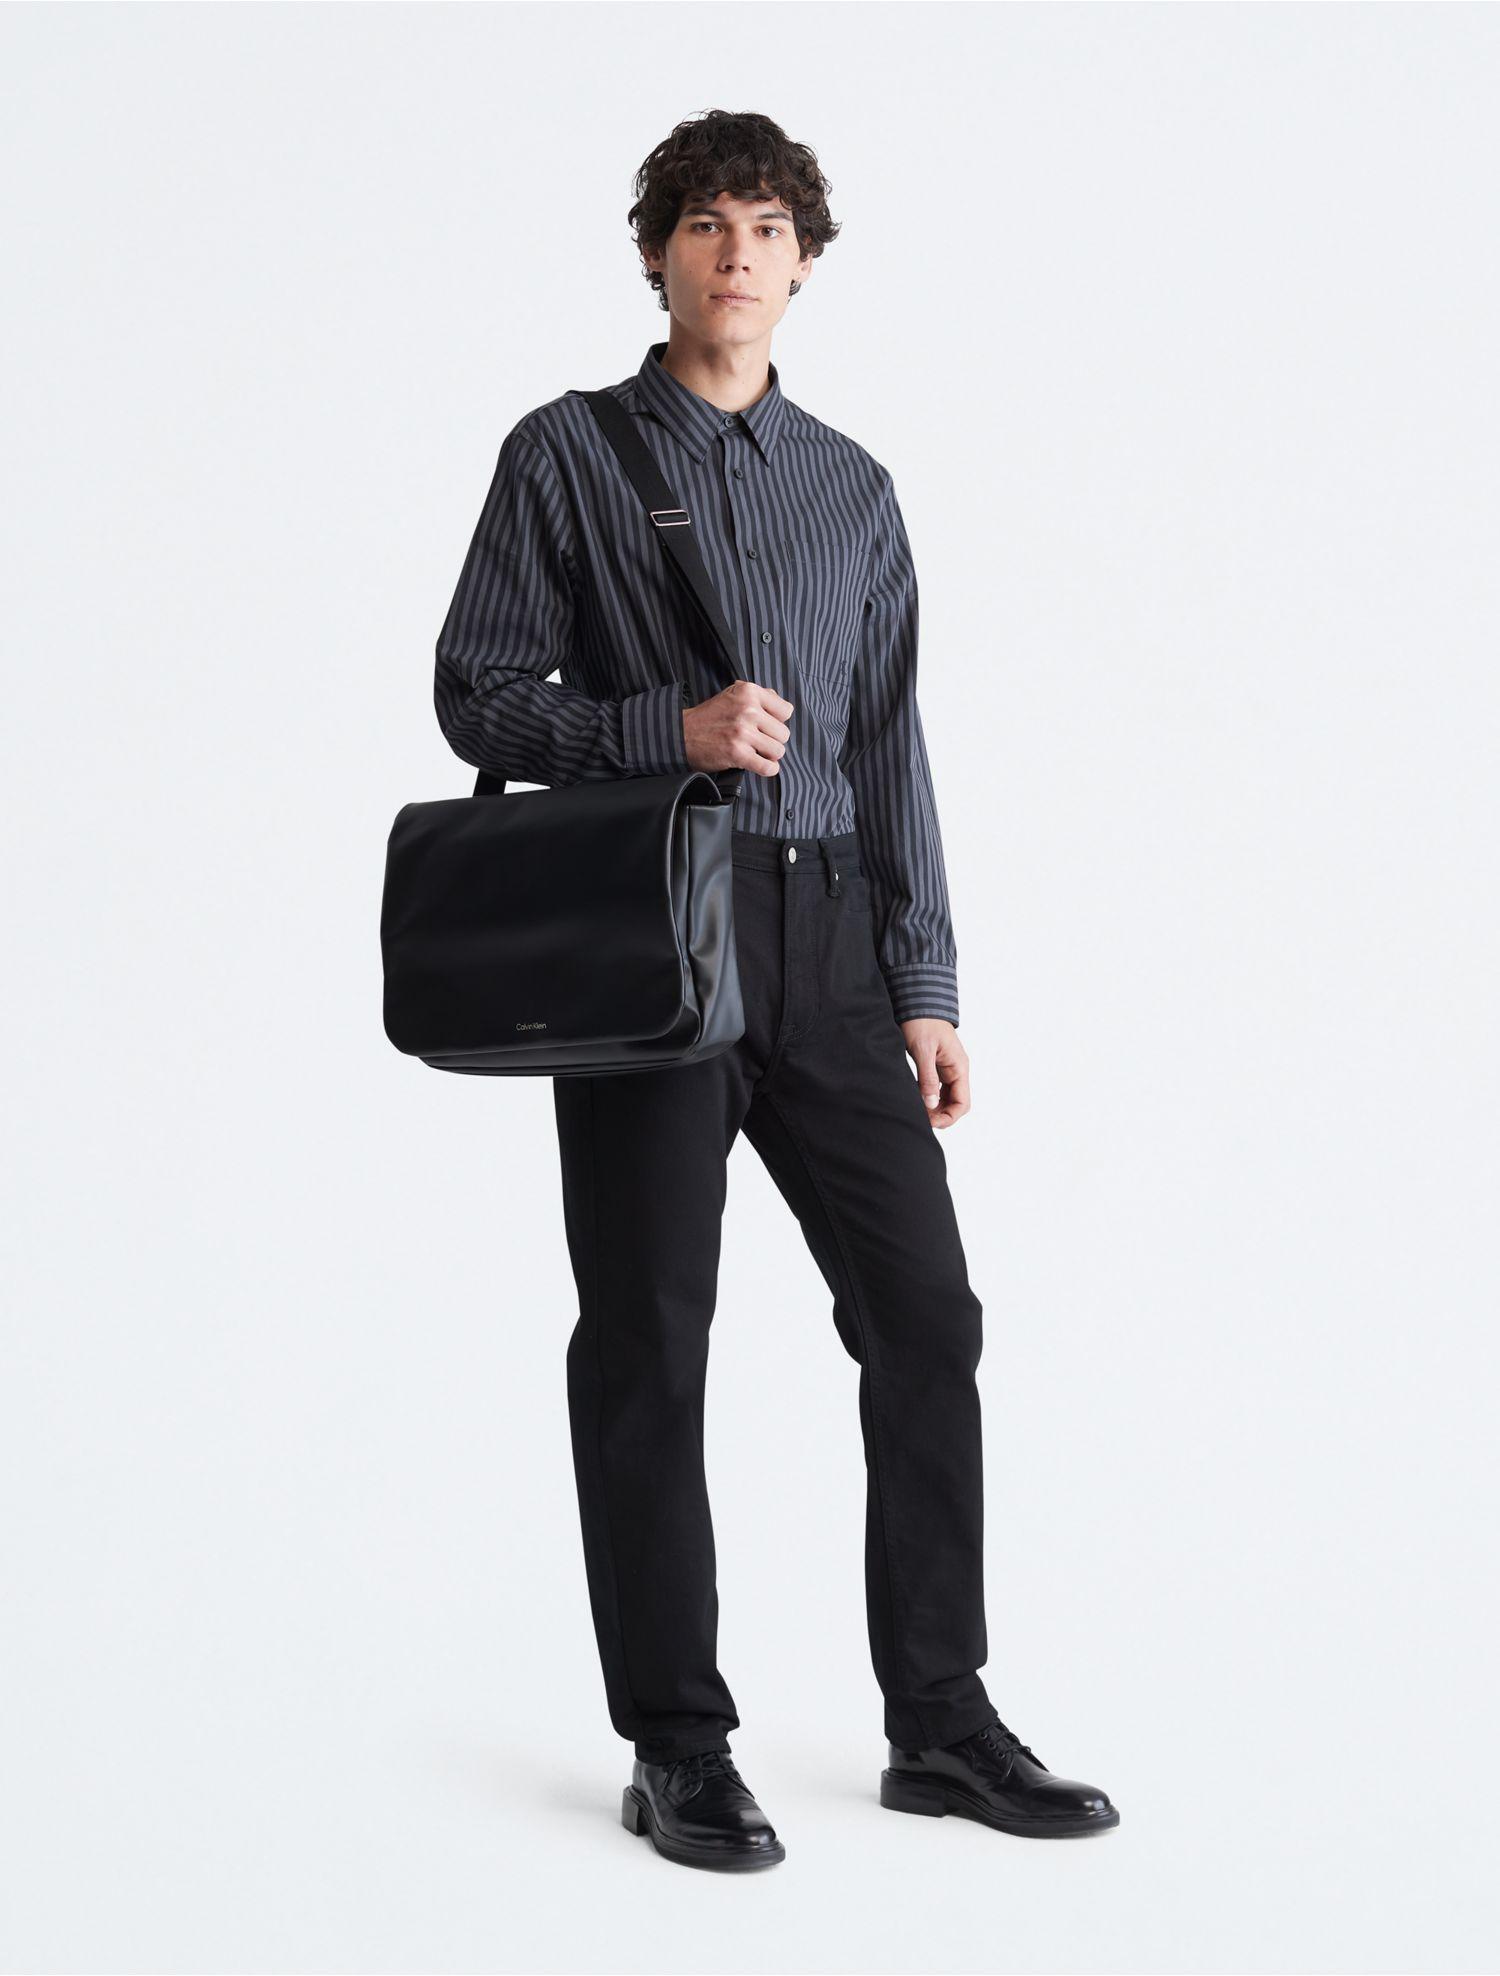 Calvin Klein Elemental Messenger Bag in Black for Men | Lyst